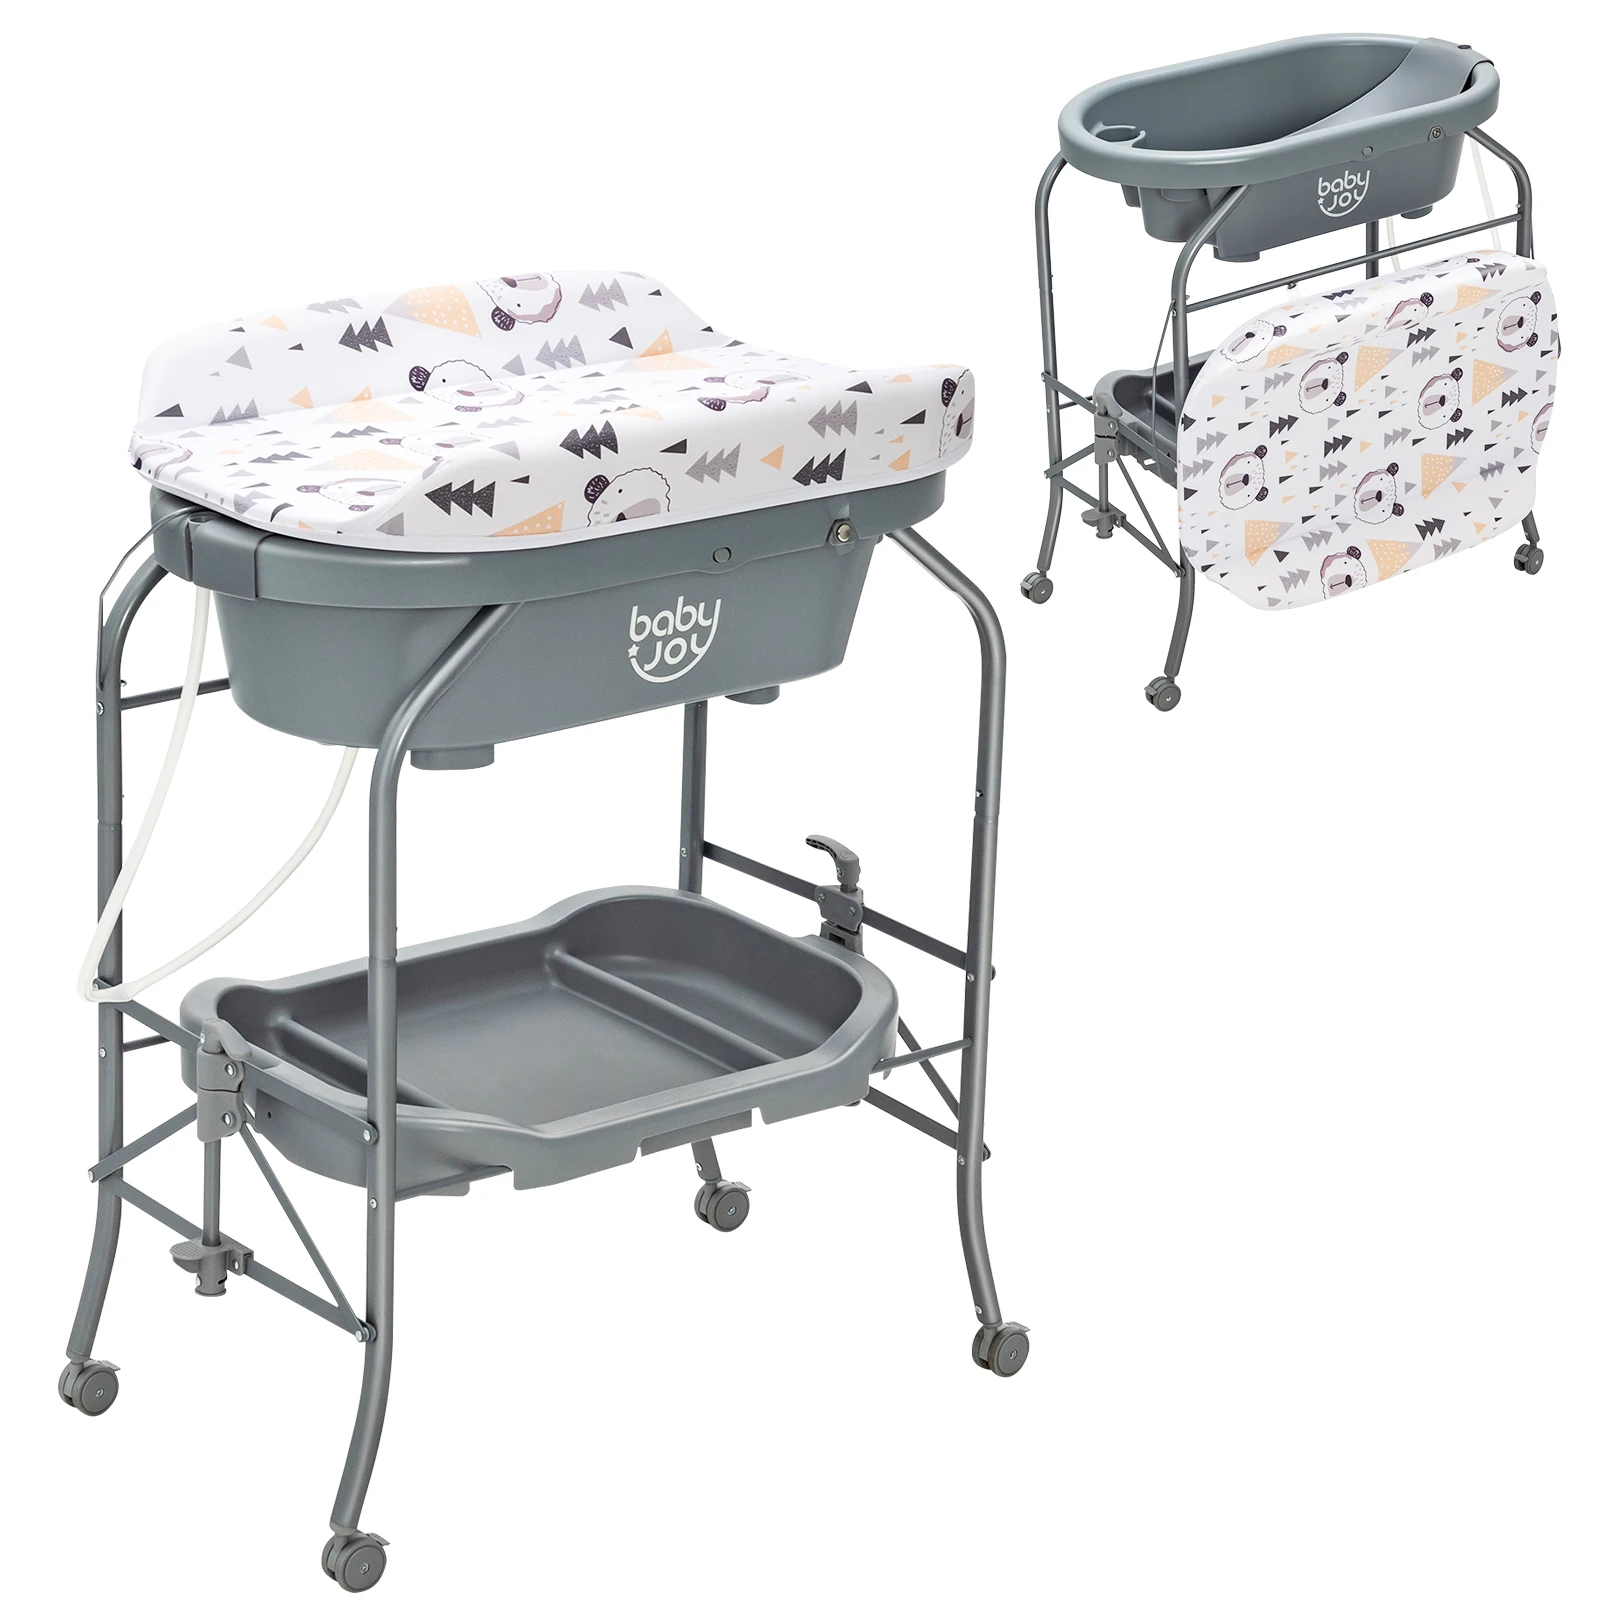 Babyjoy Baby Changing Table w/Bathtub, Folding & Portable Diaper Station w/Wheels Gray